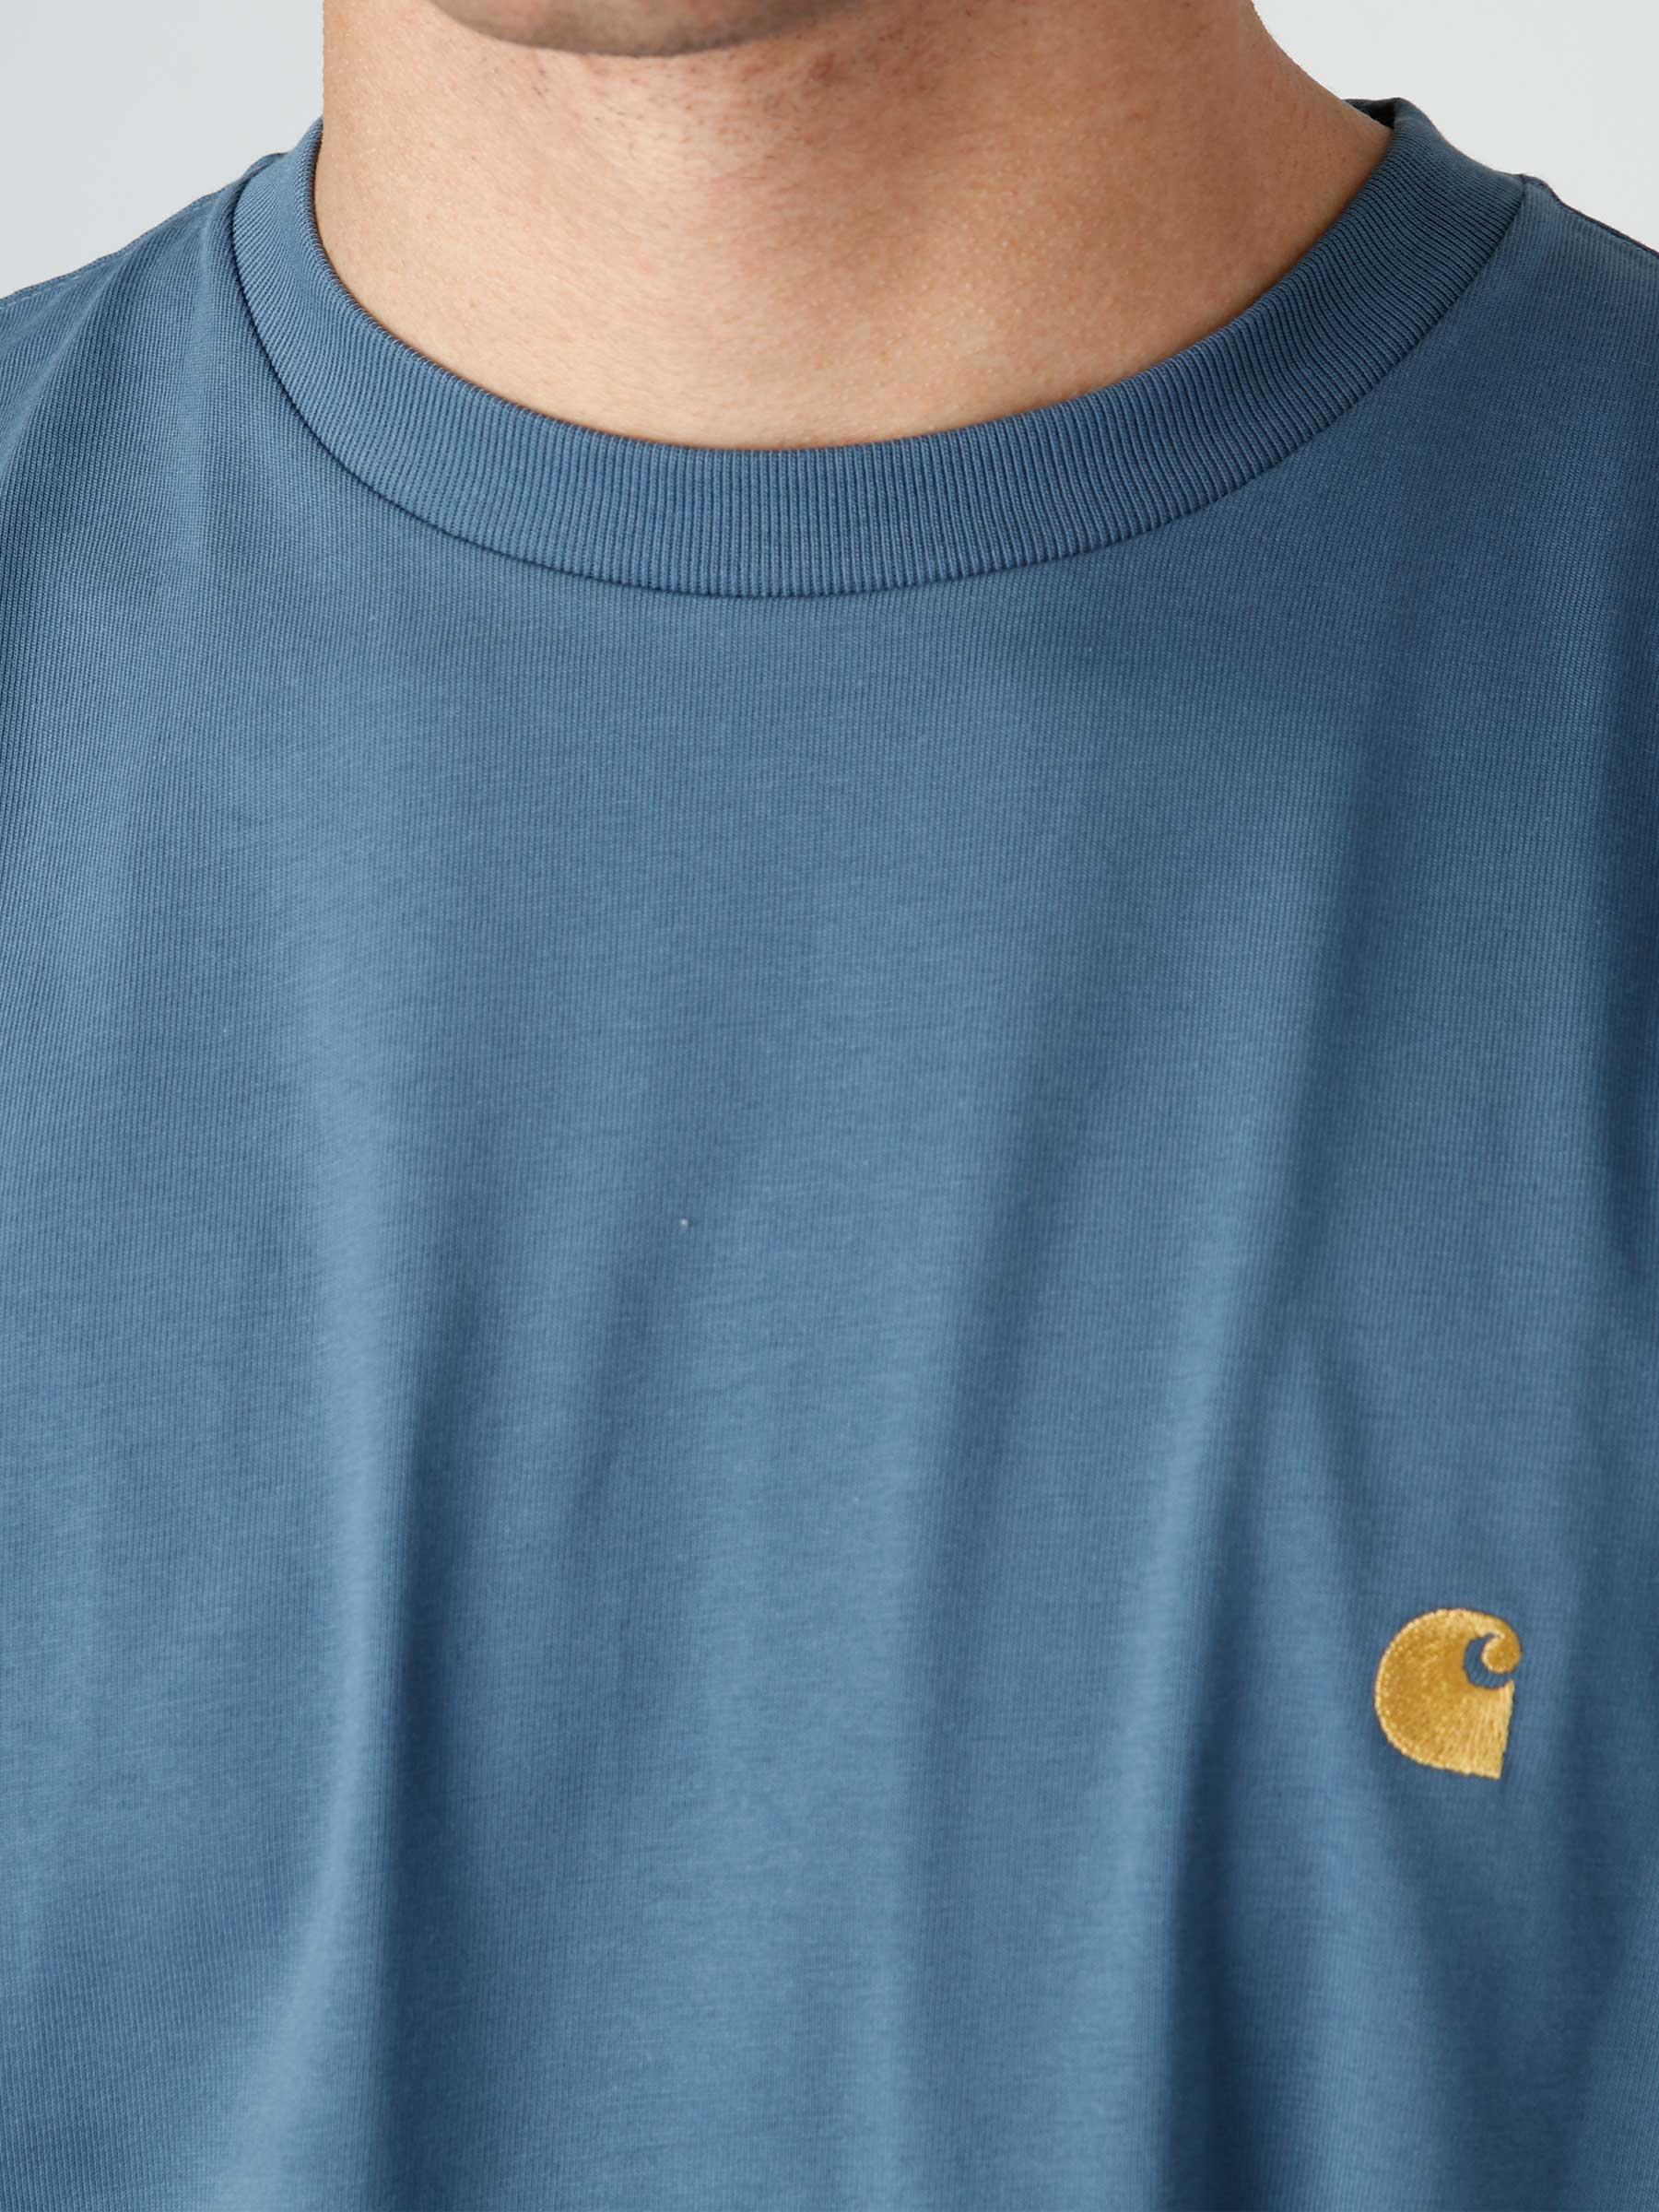 Chase T-Shirt Storm Blue Gold I026391-0XWXX